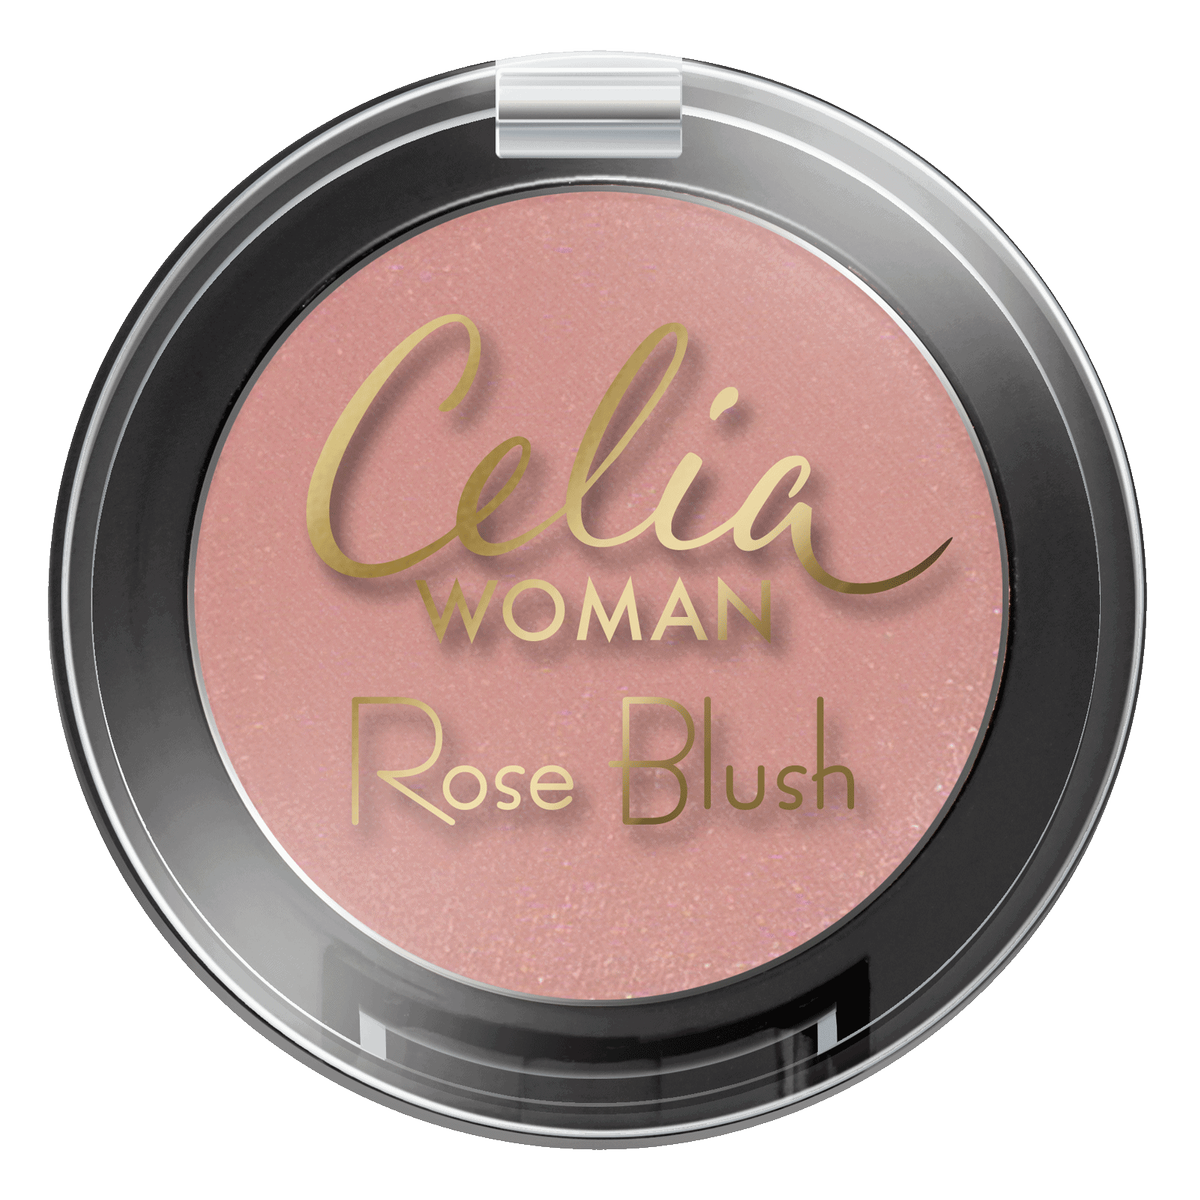 Celia Woman róż 04